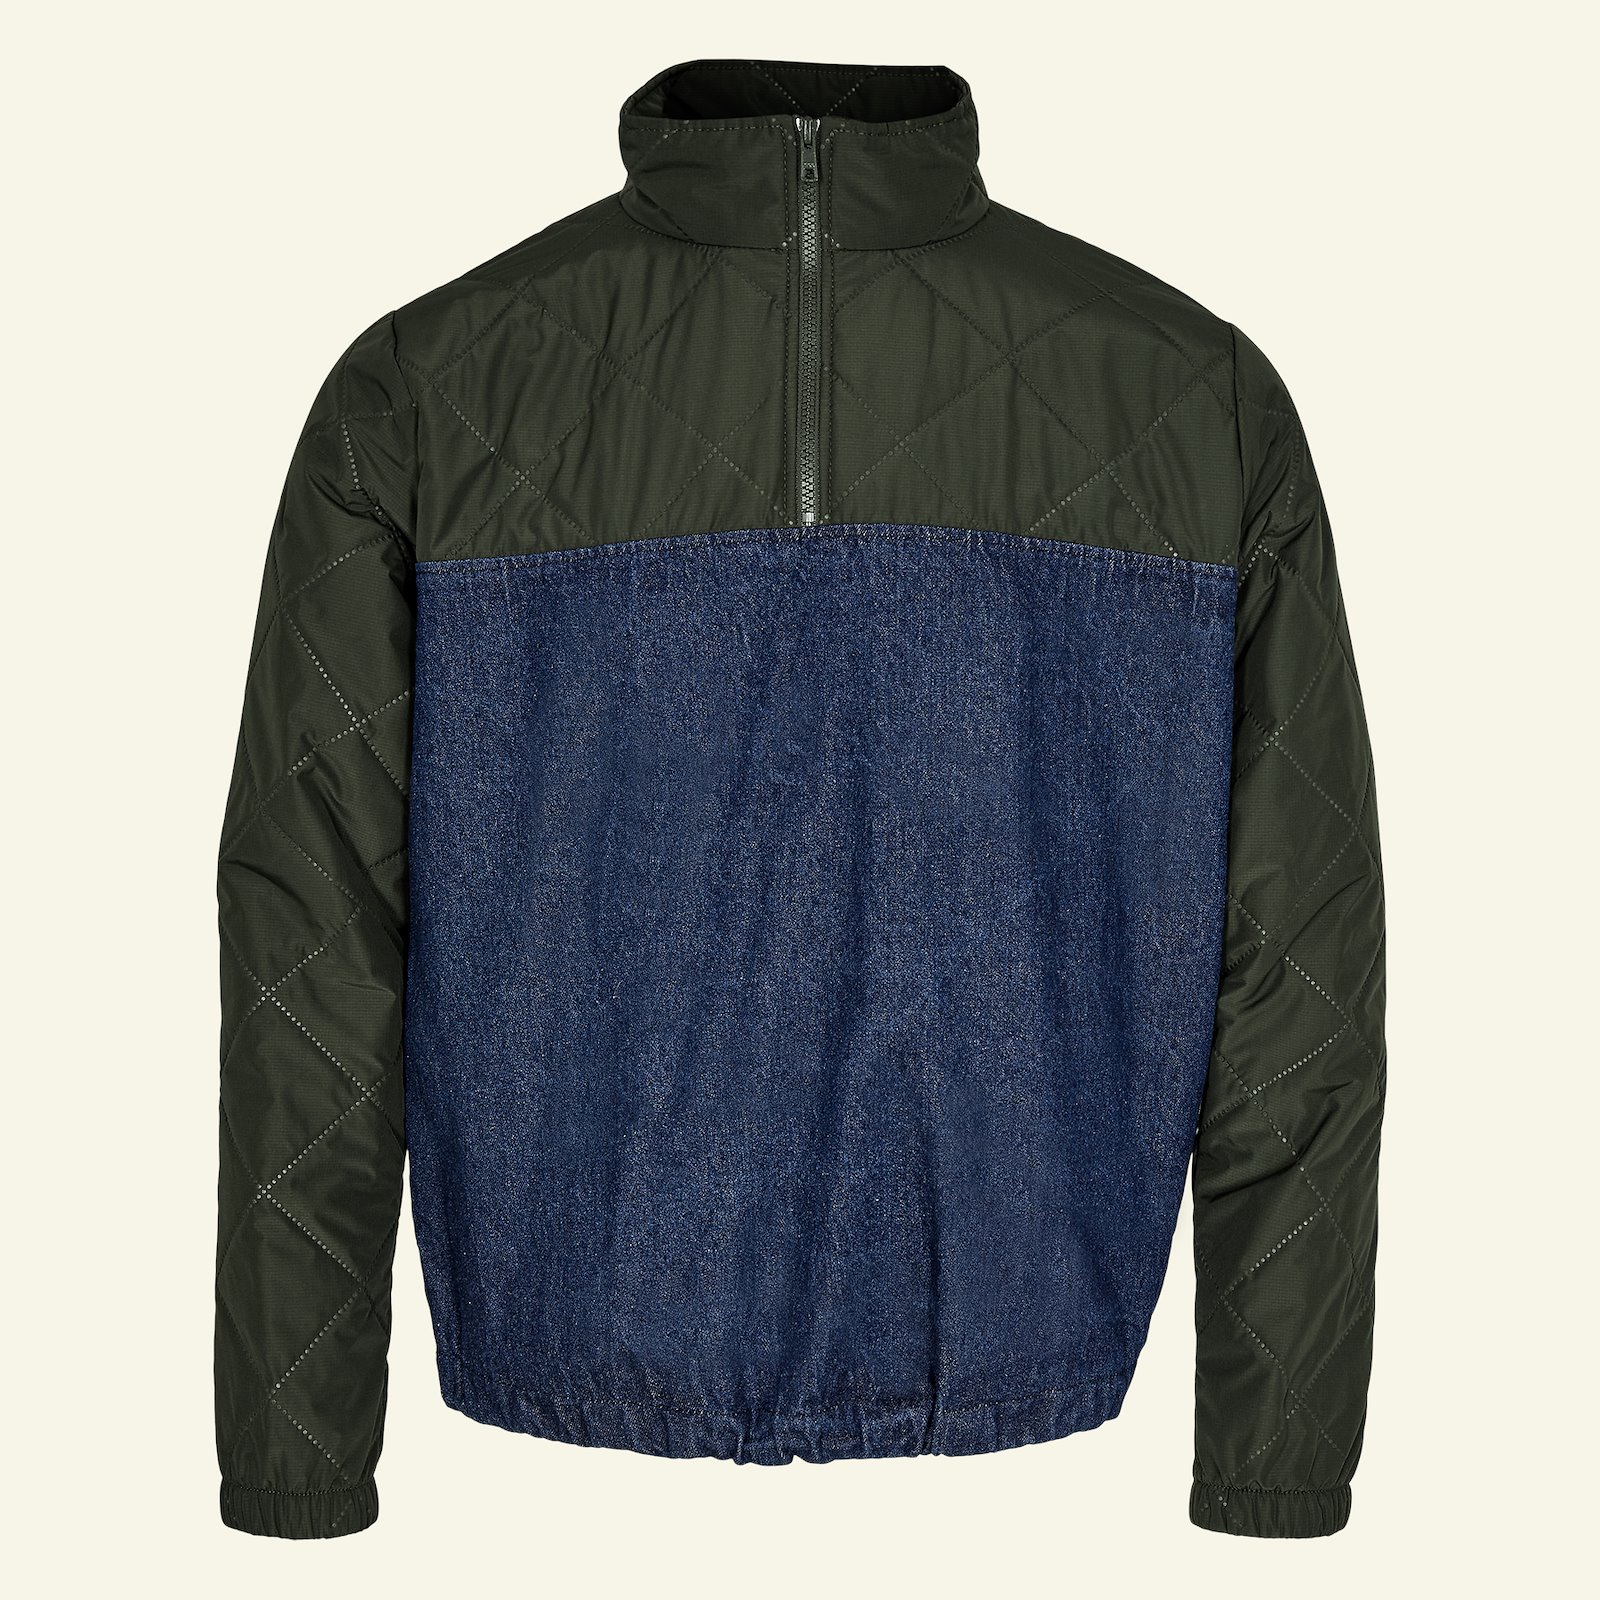 Sweatshirt and jacket, M p87004_920264_400023_sskit